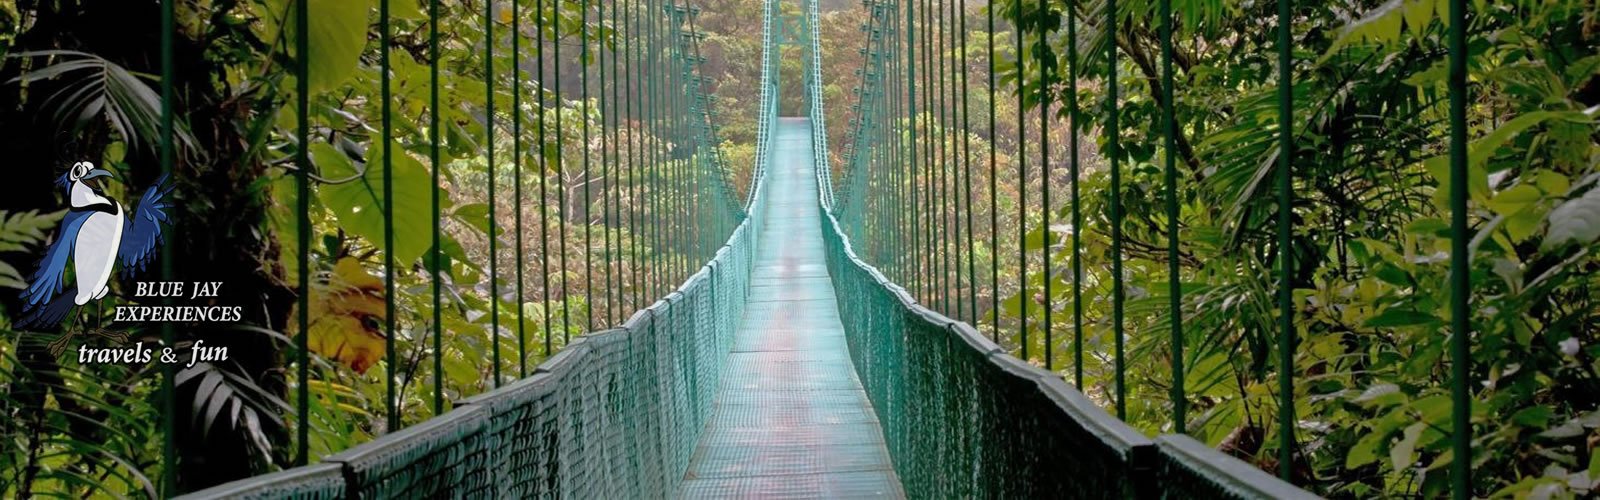 Monteverde Cloud Forest – Hanging bridges & The longest zip line